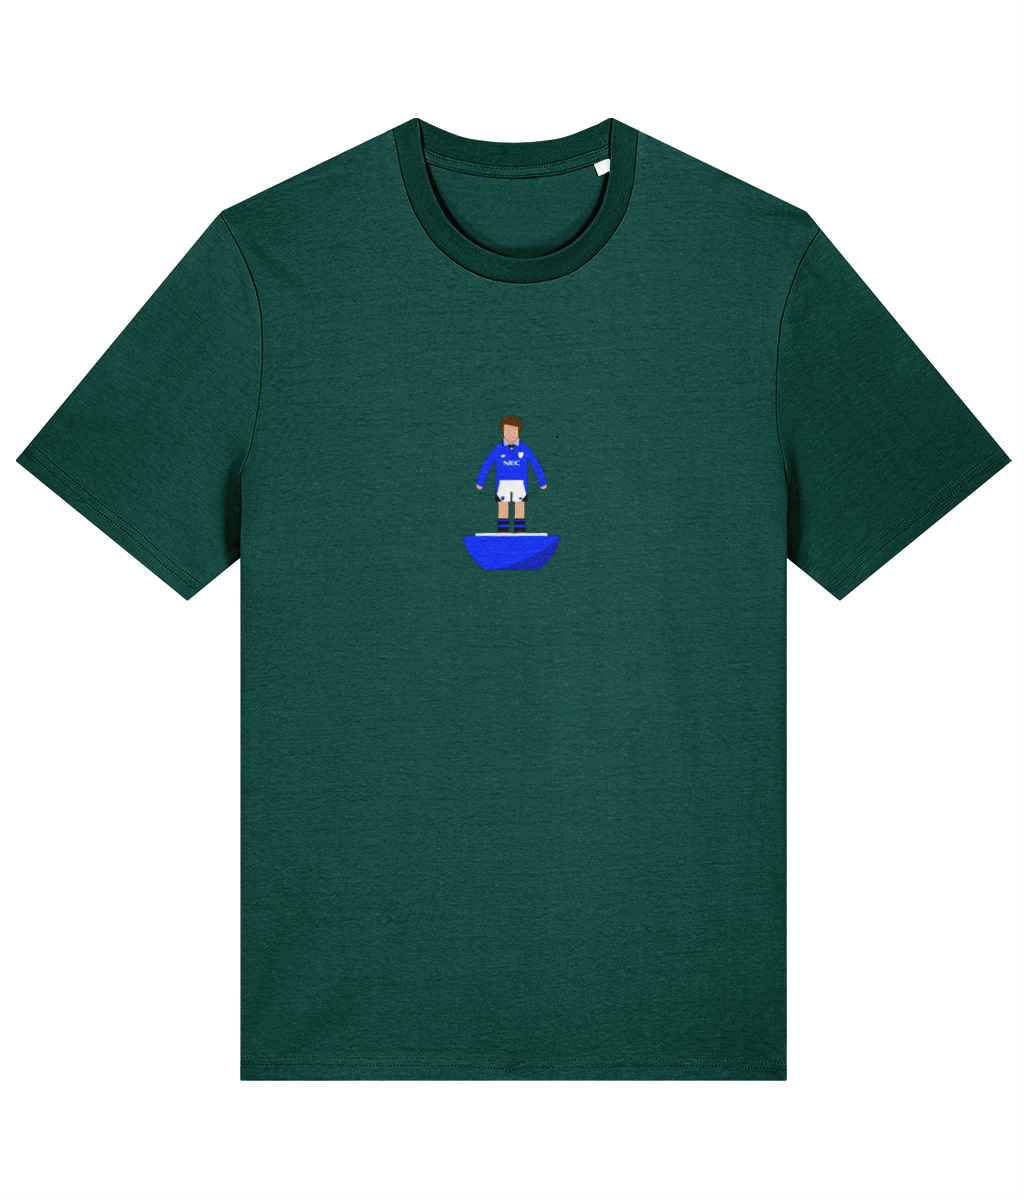 Football Kits 'Everton 1995' Unisex T-Shirt